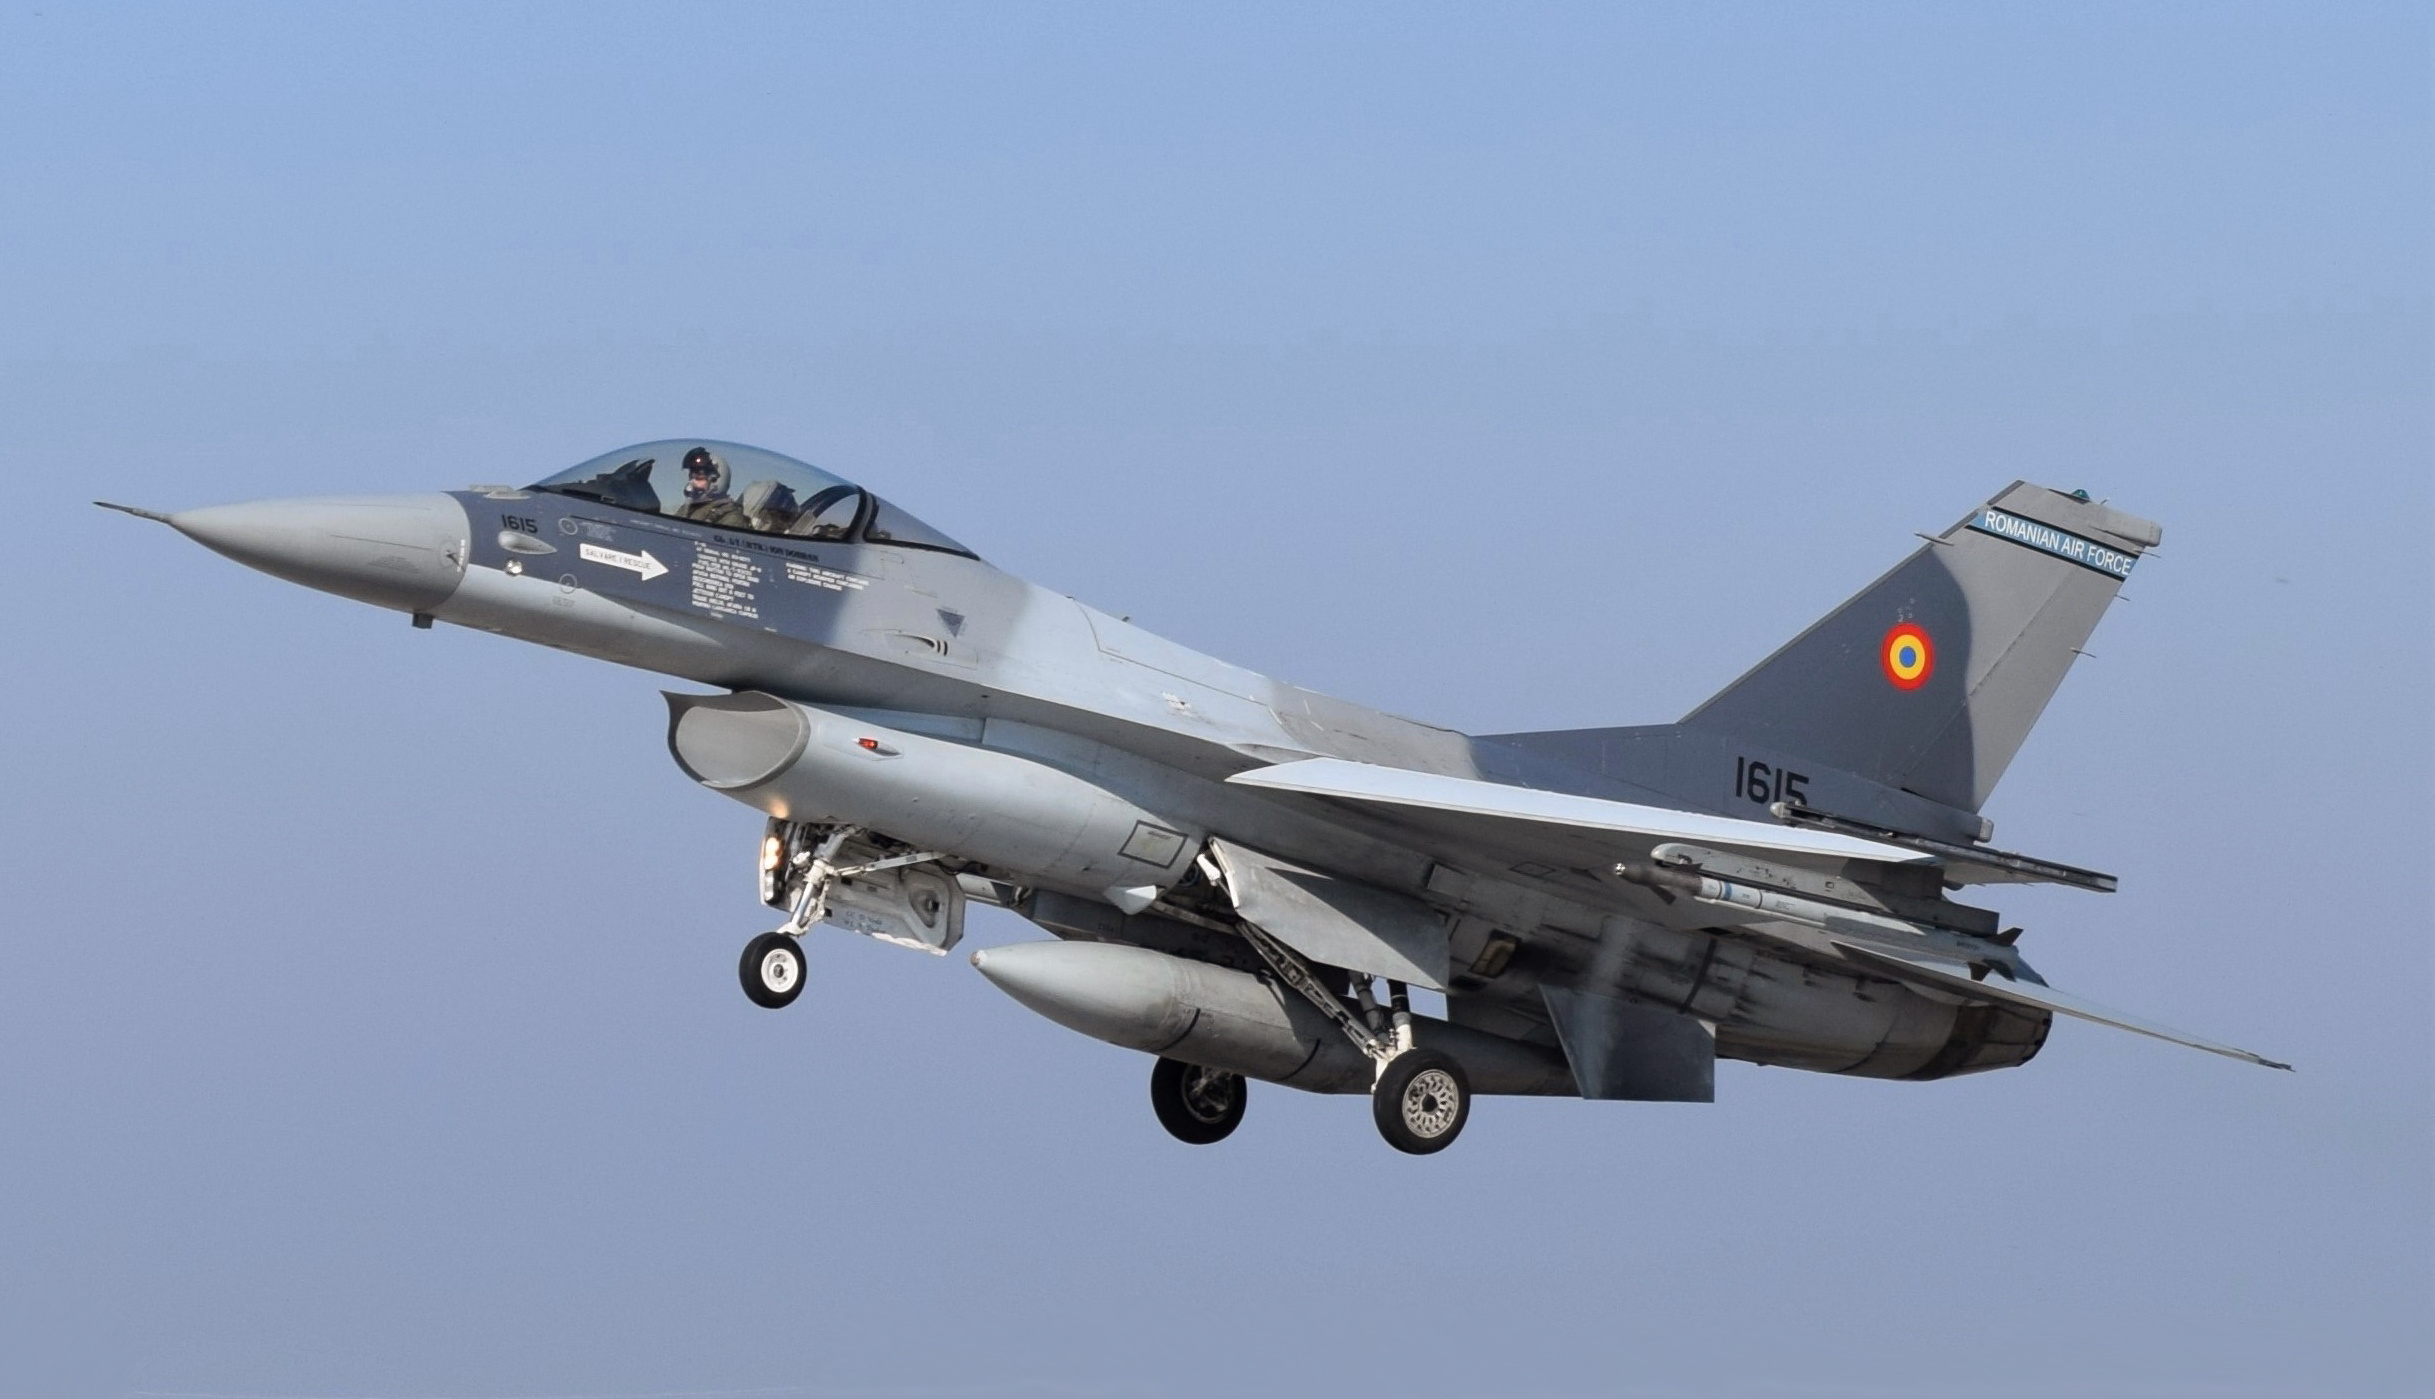 Romanian_F-16_Fighting_Falcon_lands_at_Borcea_Air_Base,_Romania